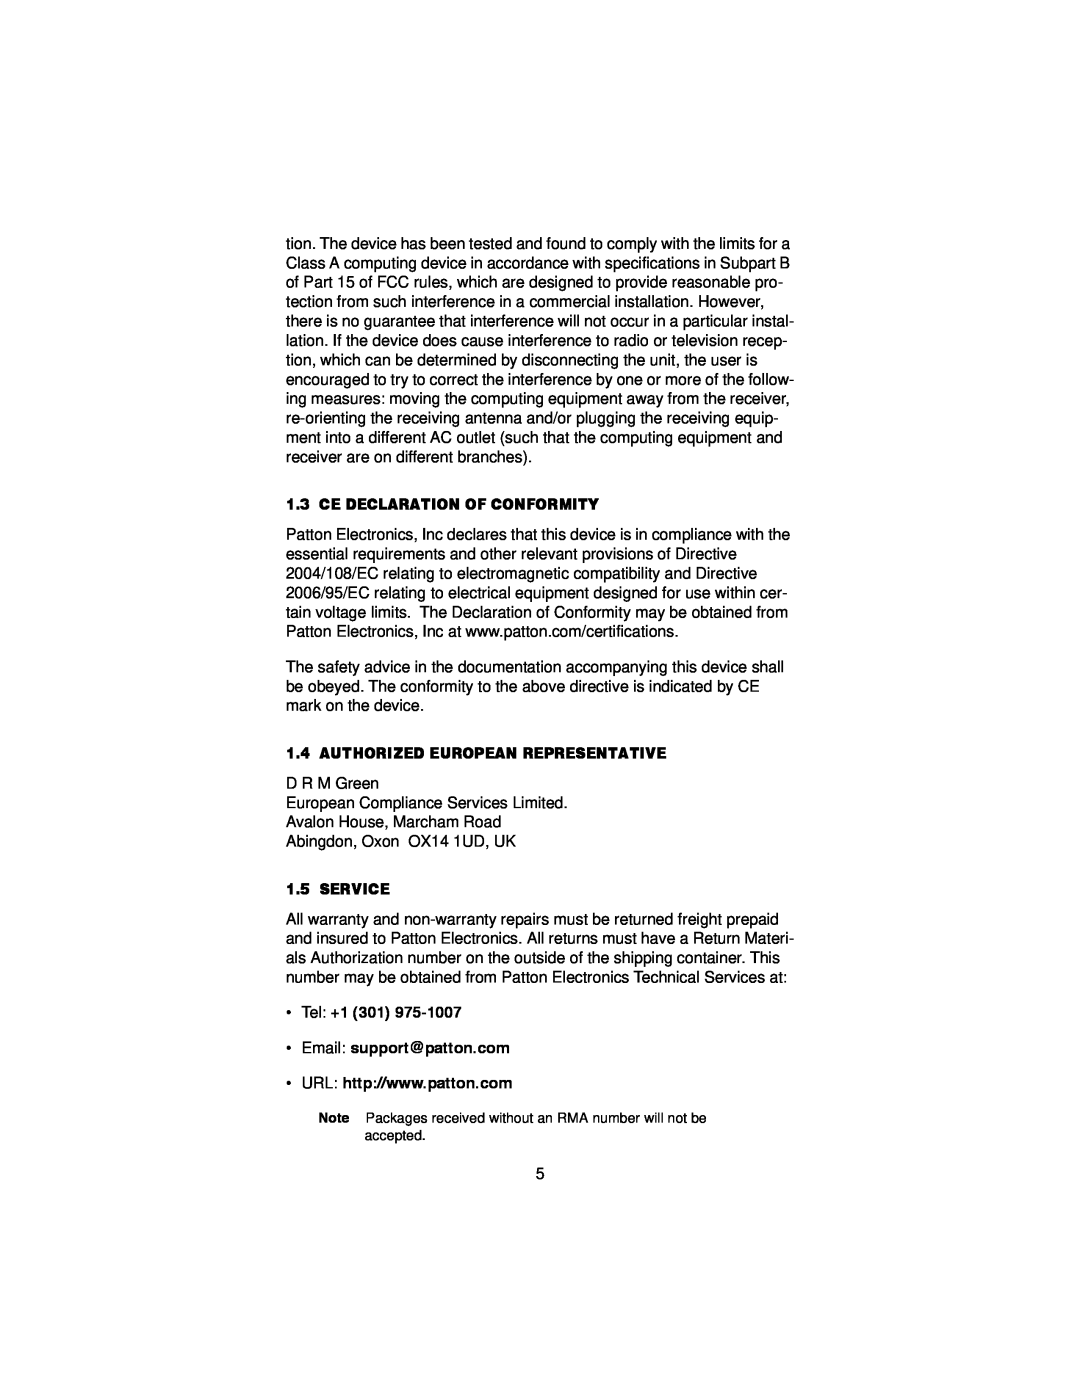 Patton electronic 2151 user manual Ce Declaration Of Conformity, Authorized European Representative, Service 